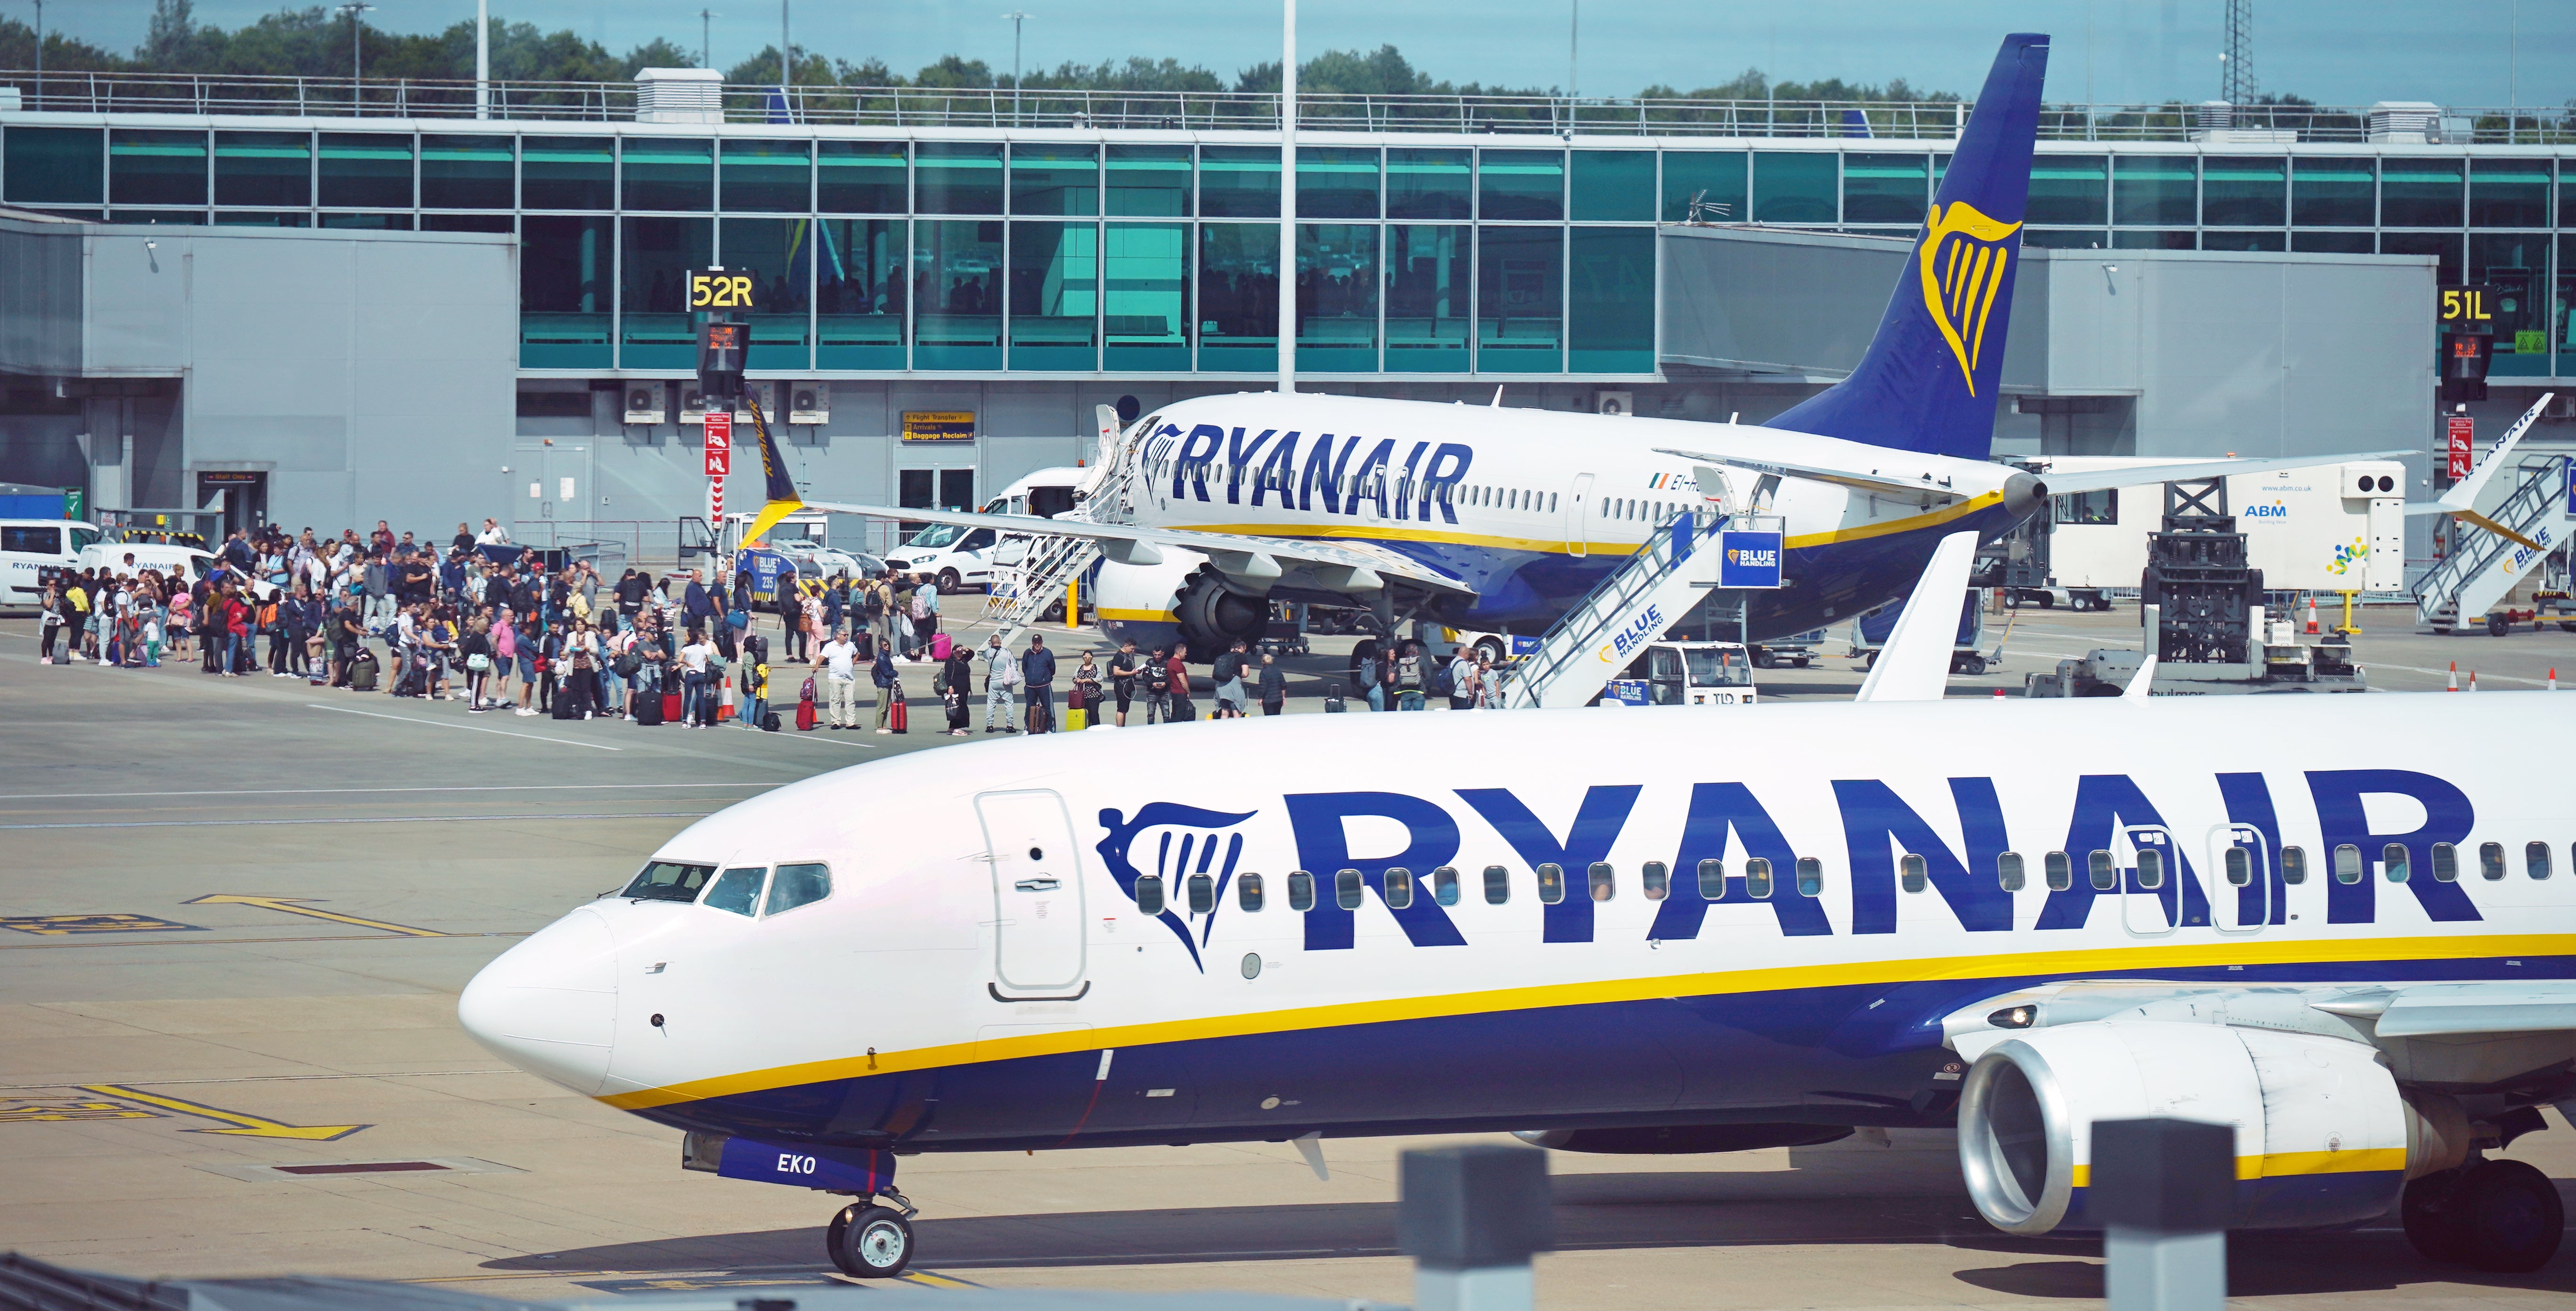 Ryanair’s super low fares helped Jack achieve his bargain journey